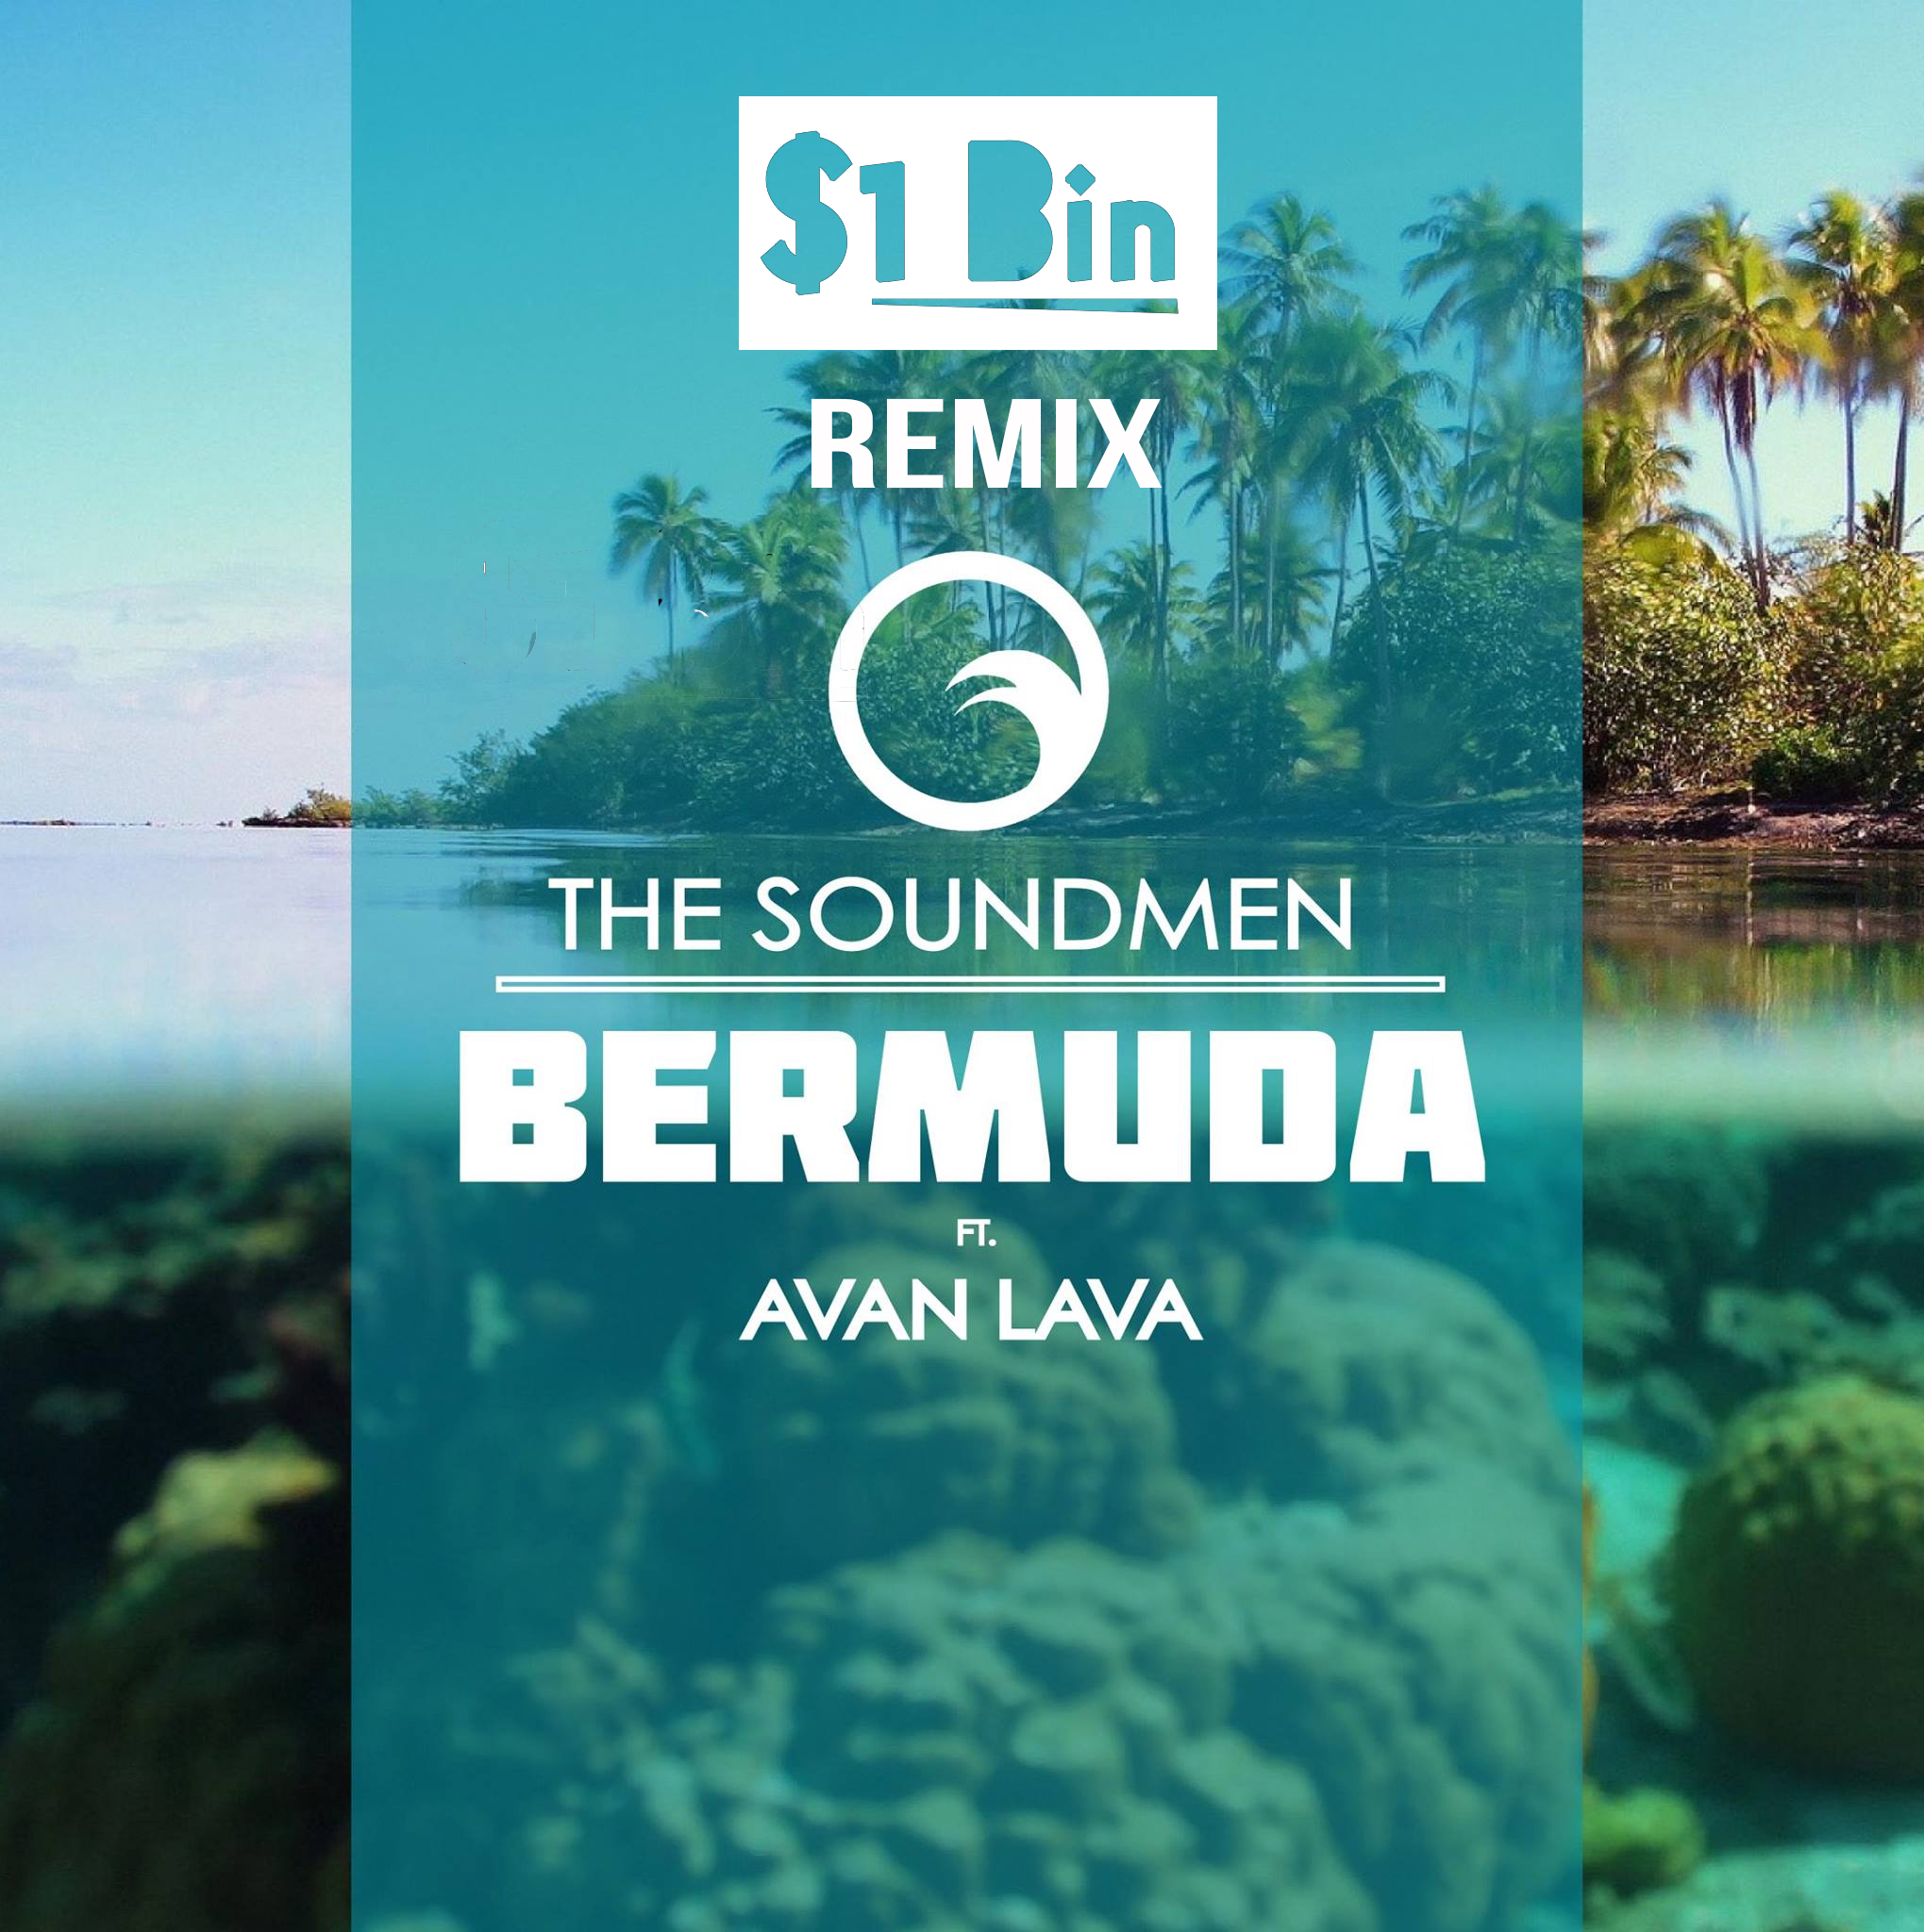 Bermuda | Dollar Bin Remix